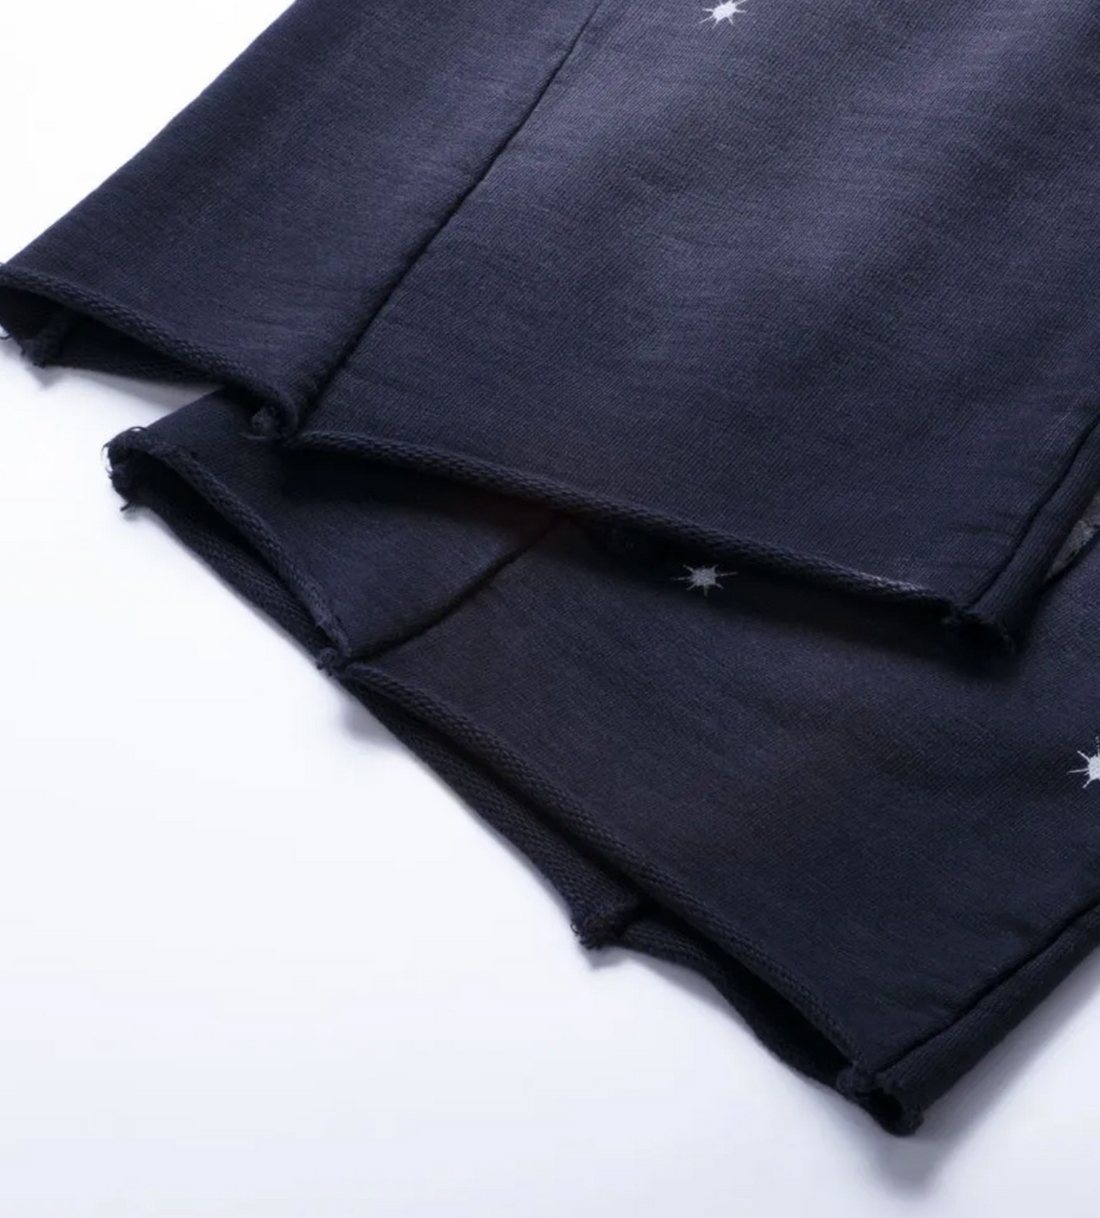 Hellstar Studios Capsule 9.0 ‘Racer Black Flare’ Sweatpants Black, Bottom Flare View